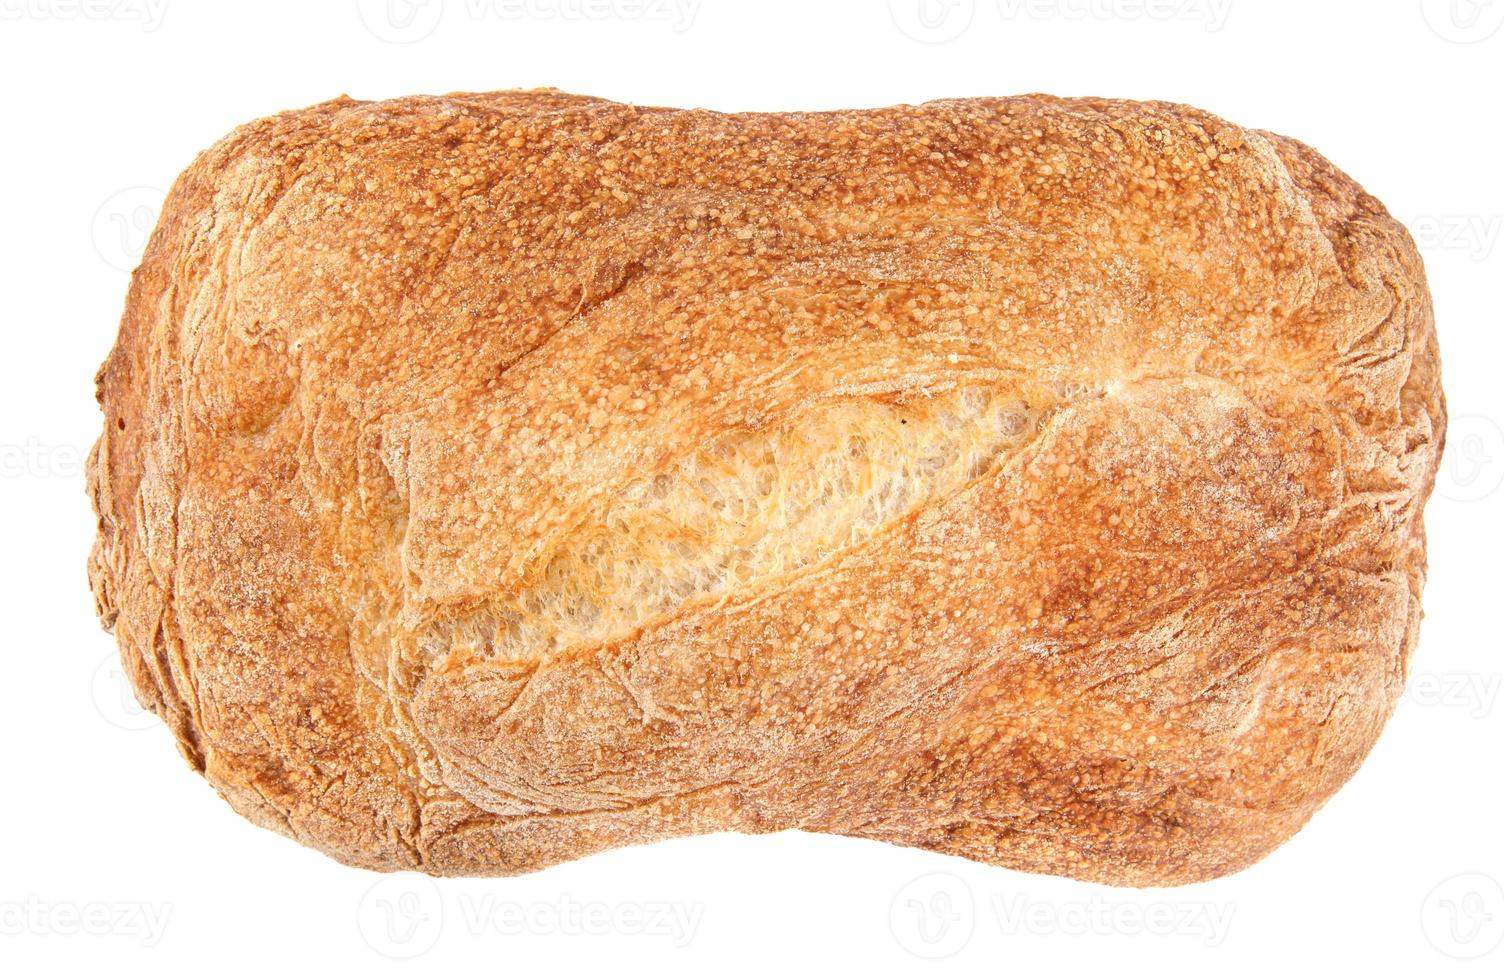 Ciabatta, Italian bread isolated on white background photo